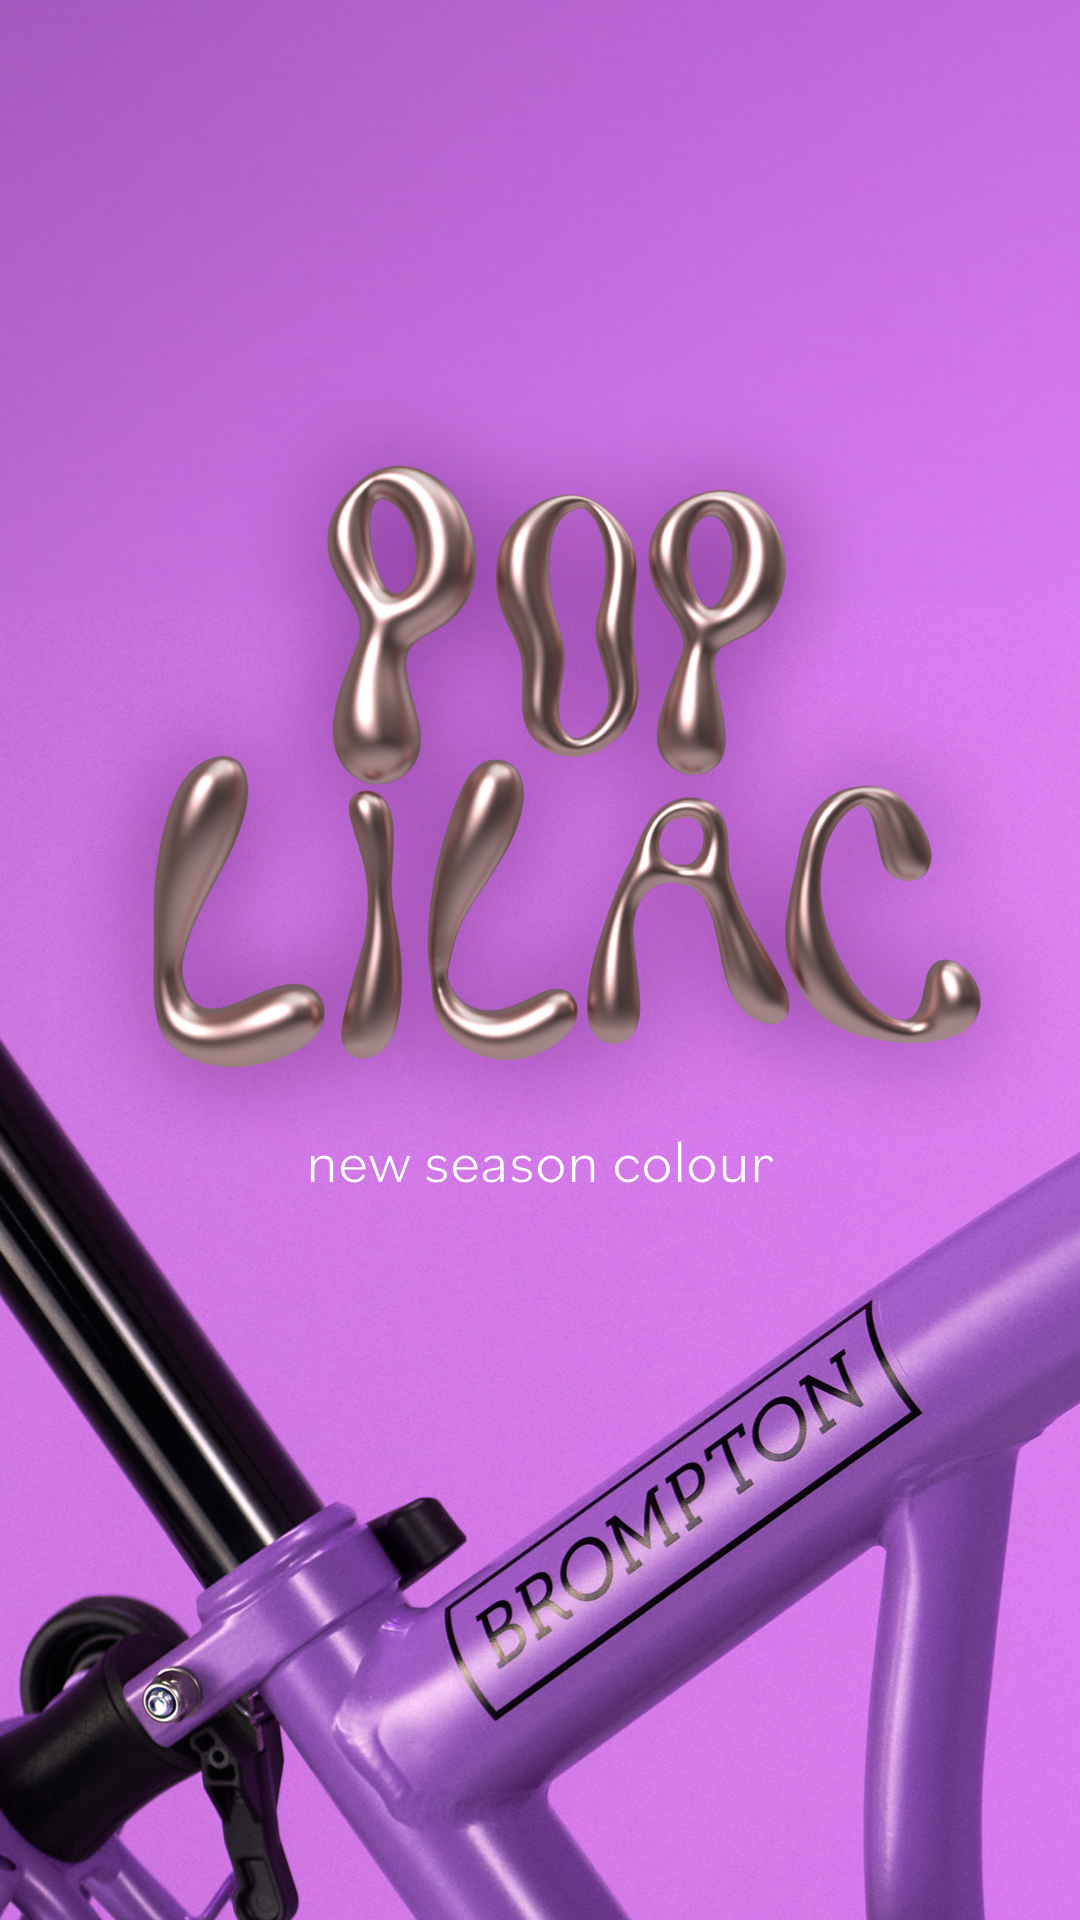 【BROMPTON】New シーズナブルカラー！「Pop Lilac」 | 池袋で自転車をお探しならY's Road 池袋本館